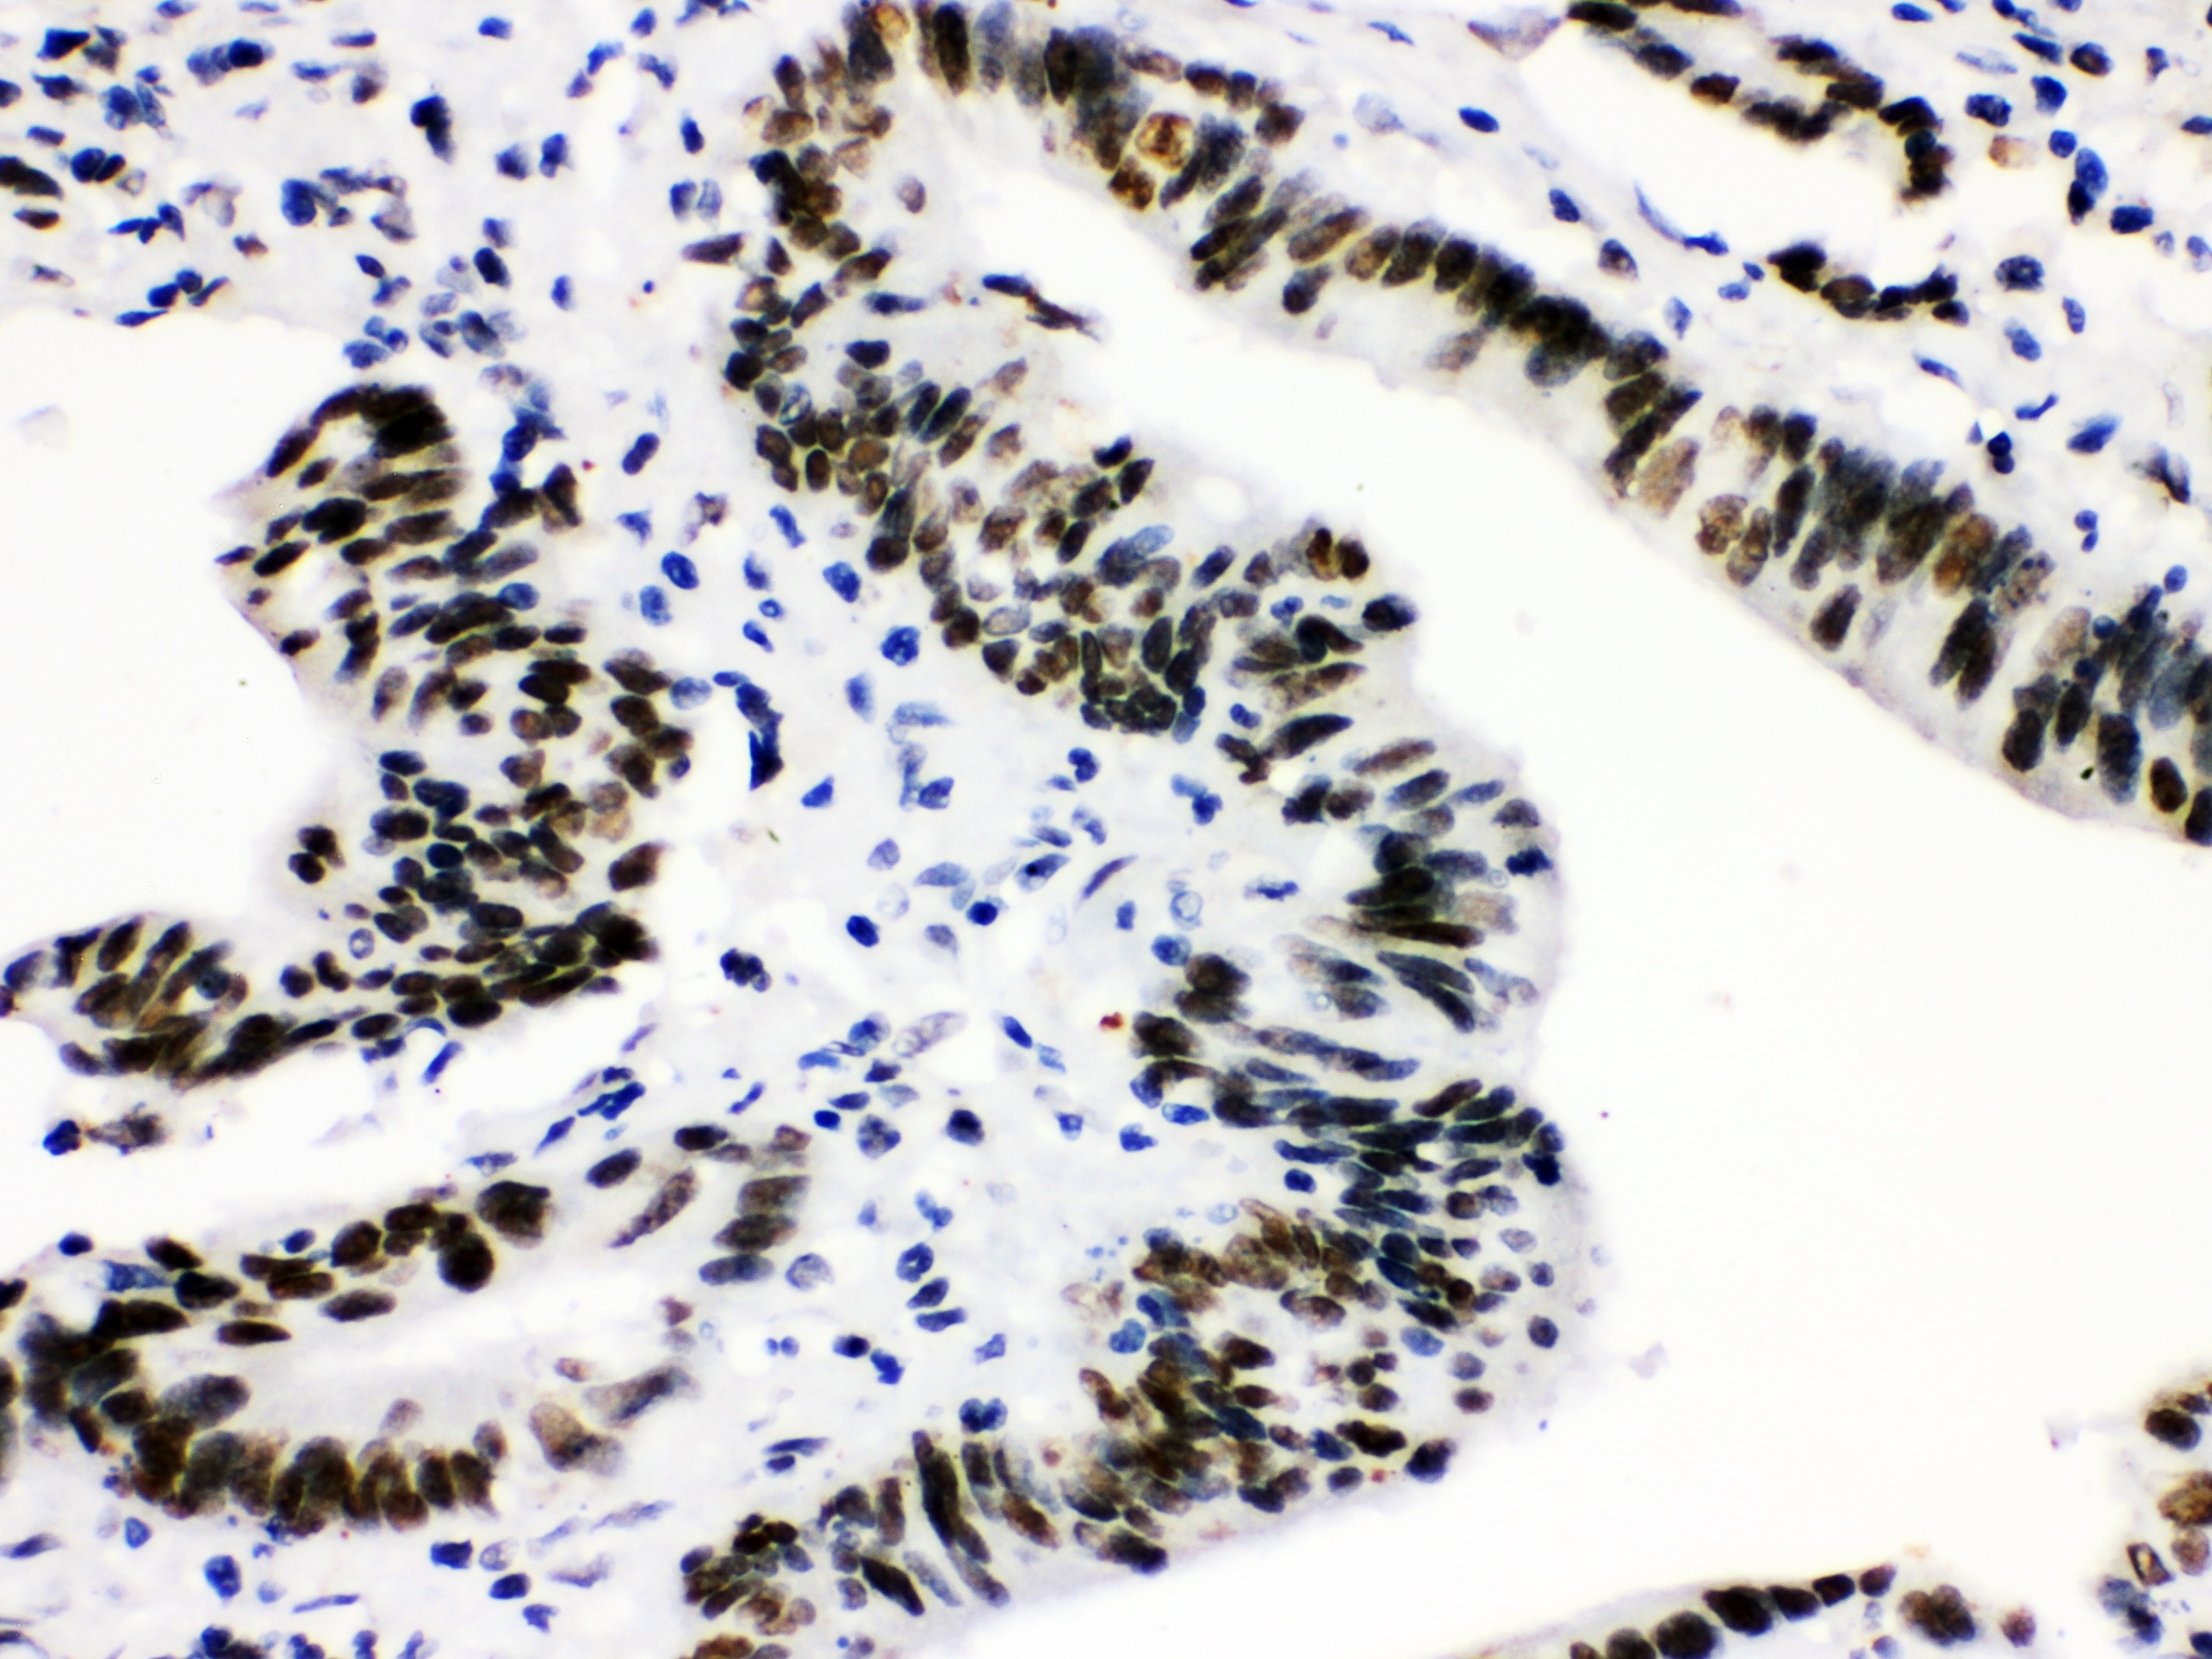 CTBP2 Antibody (OABB01909) in Human Intestinal Cancer Tissue using Immunohistochemistry